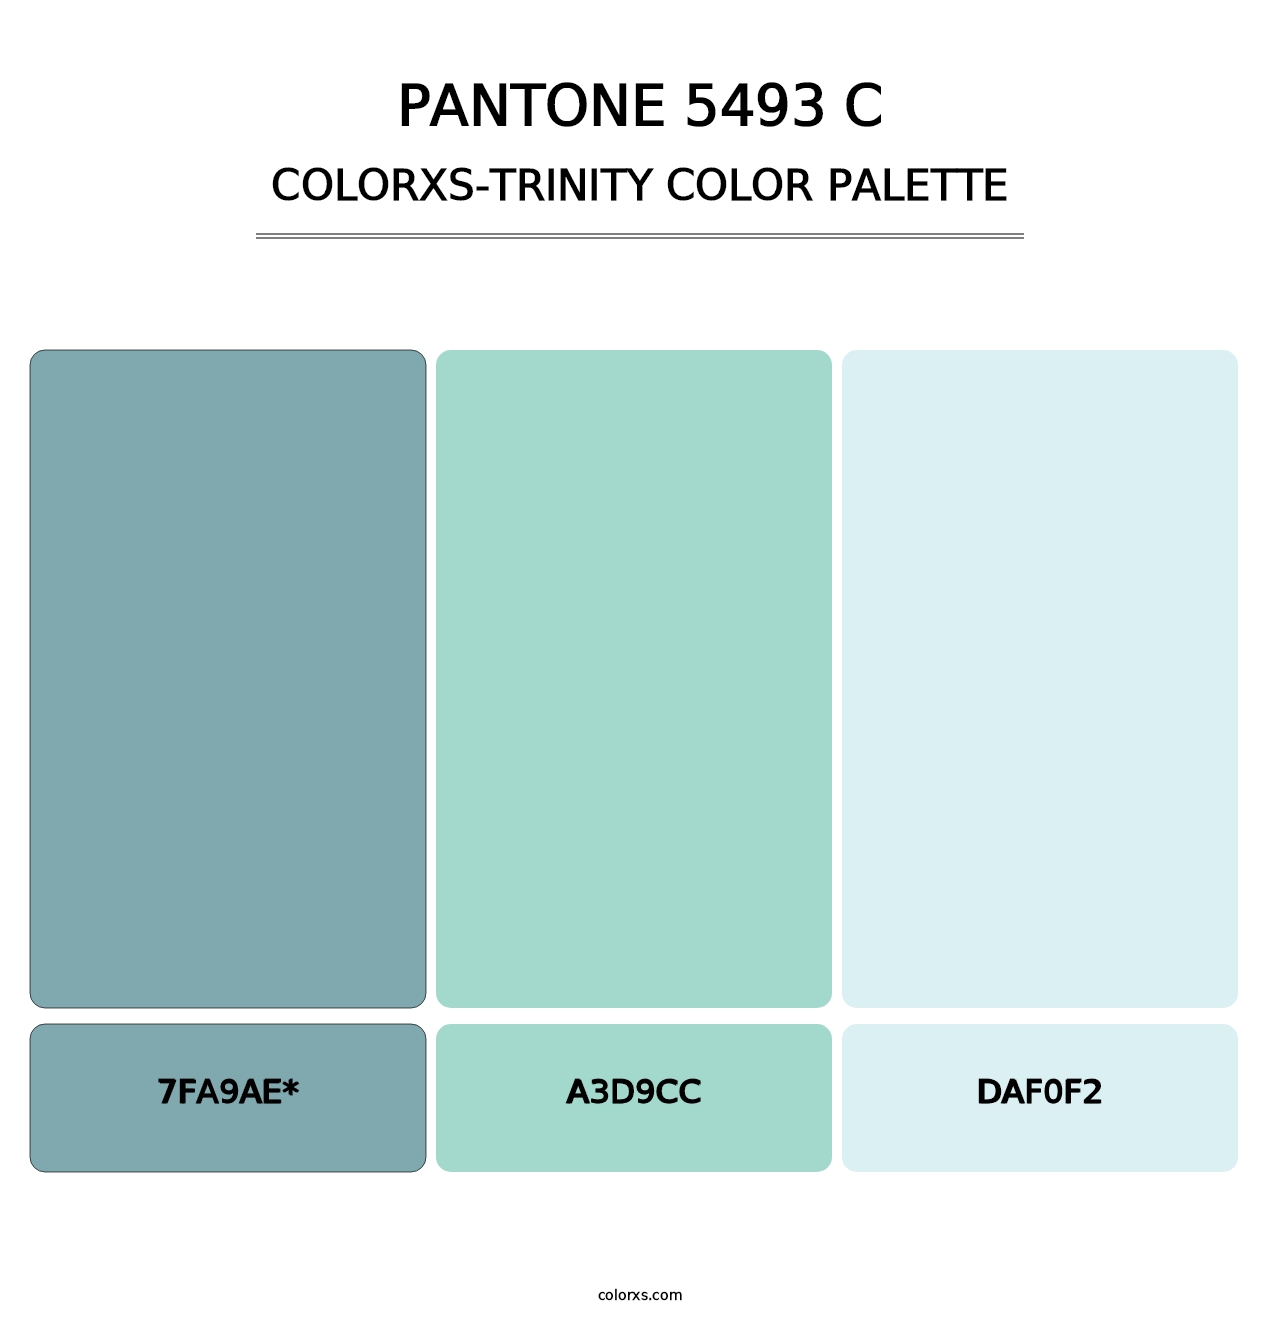 PANTONE 5493 C - Colorxs Trinity Palette